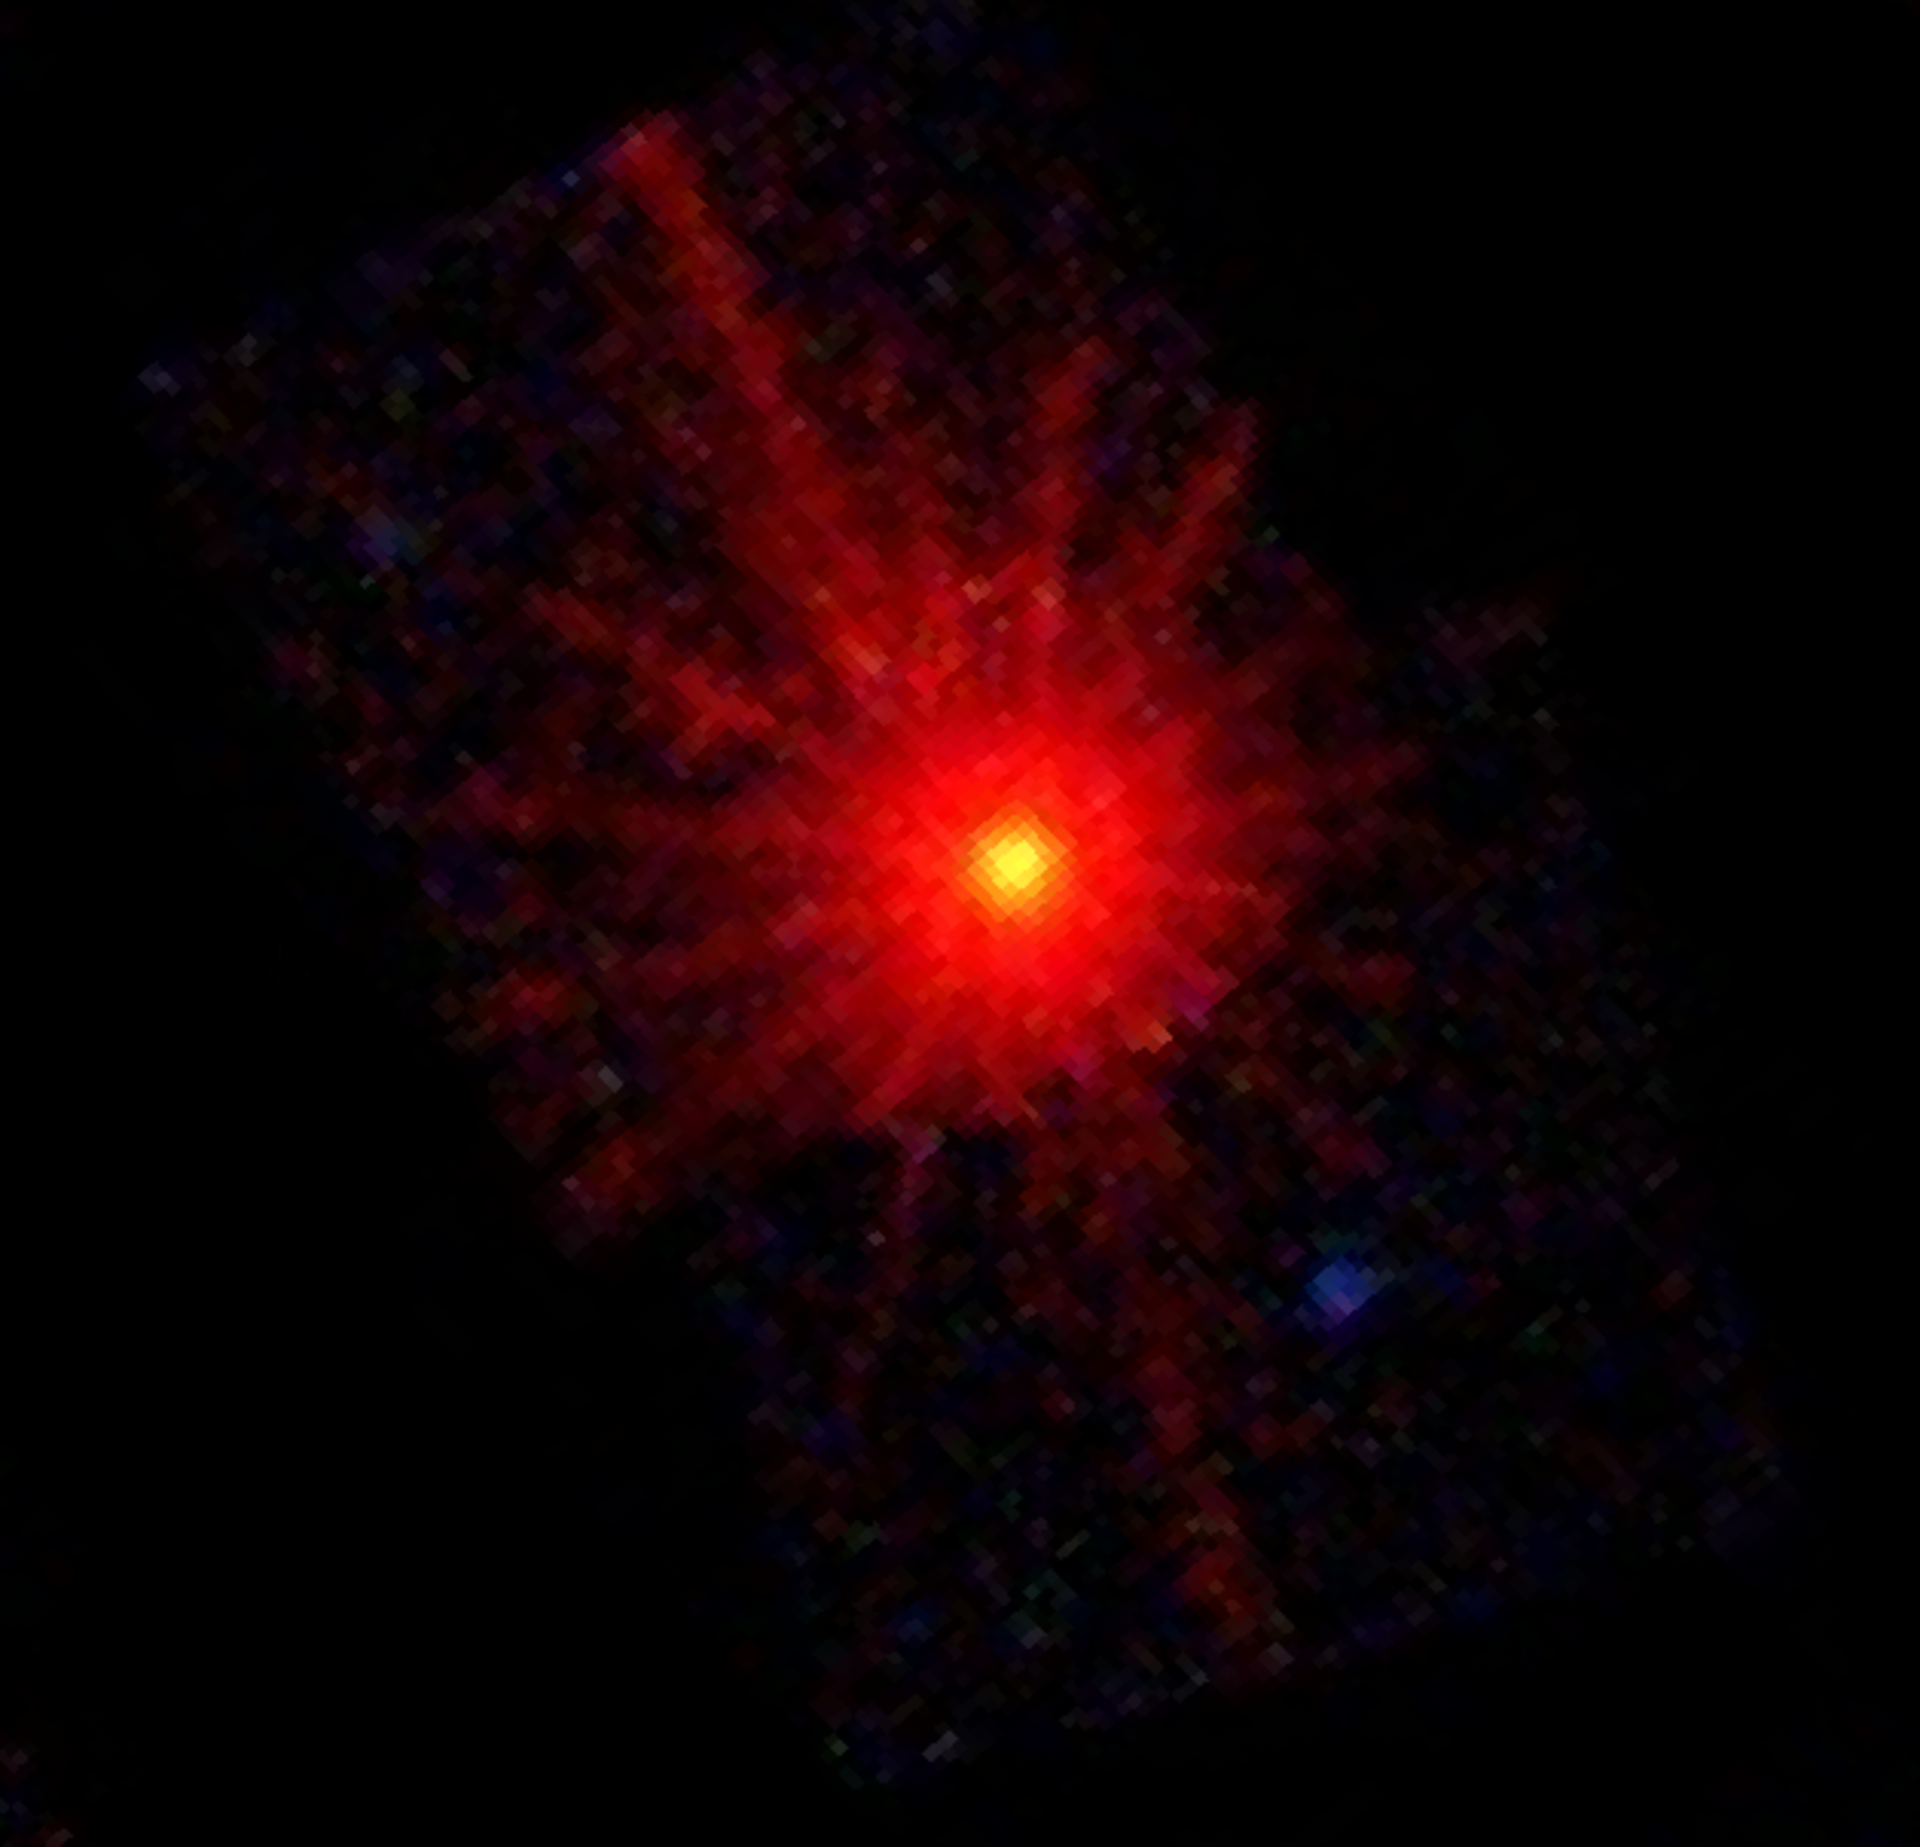 XMM-Newton's view of star-shredding black hole